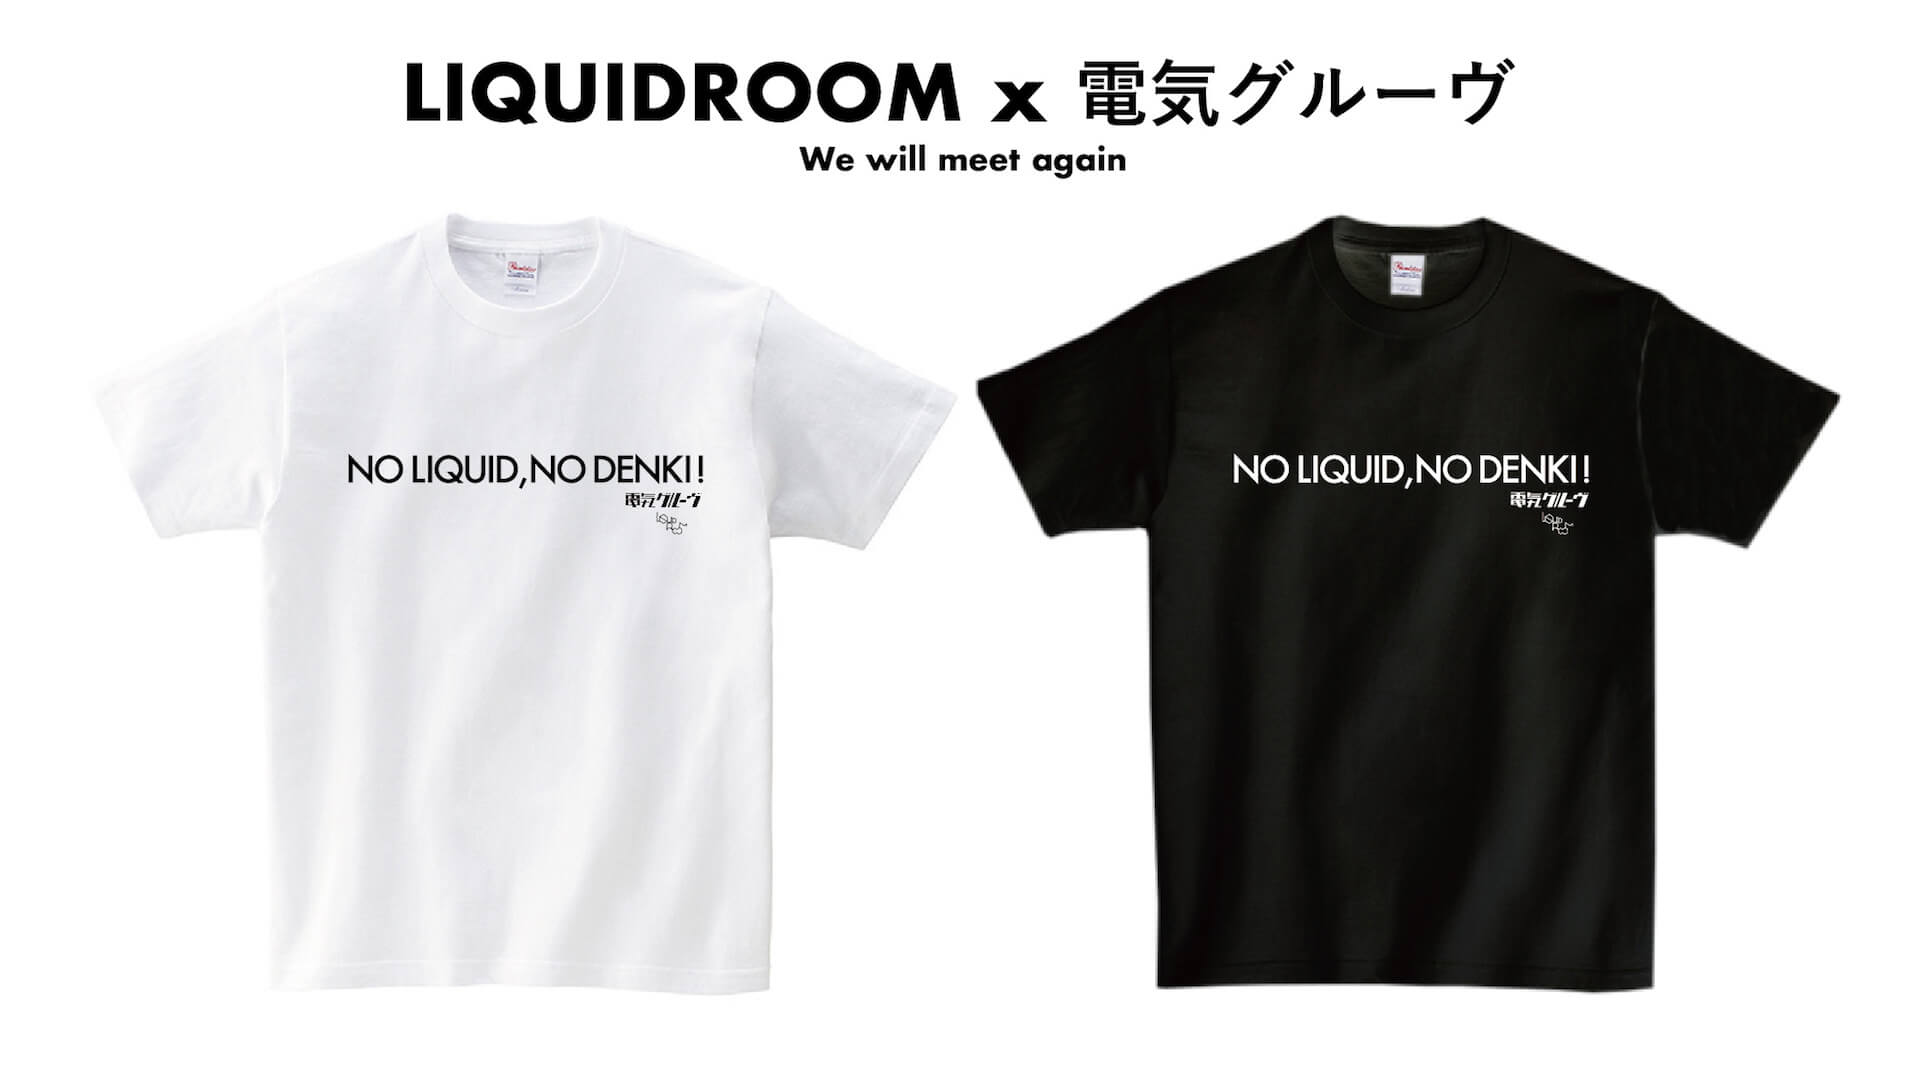 〈We will meet again〉──LIQUIDROOMが電気グルーヴ、坂本慎太郎とのコラボTシャツを受注販売開始 music200501-liquidroom-2